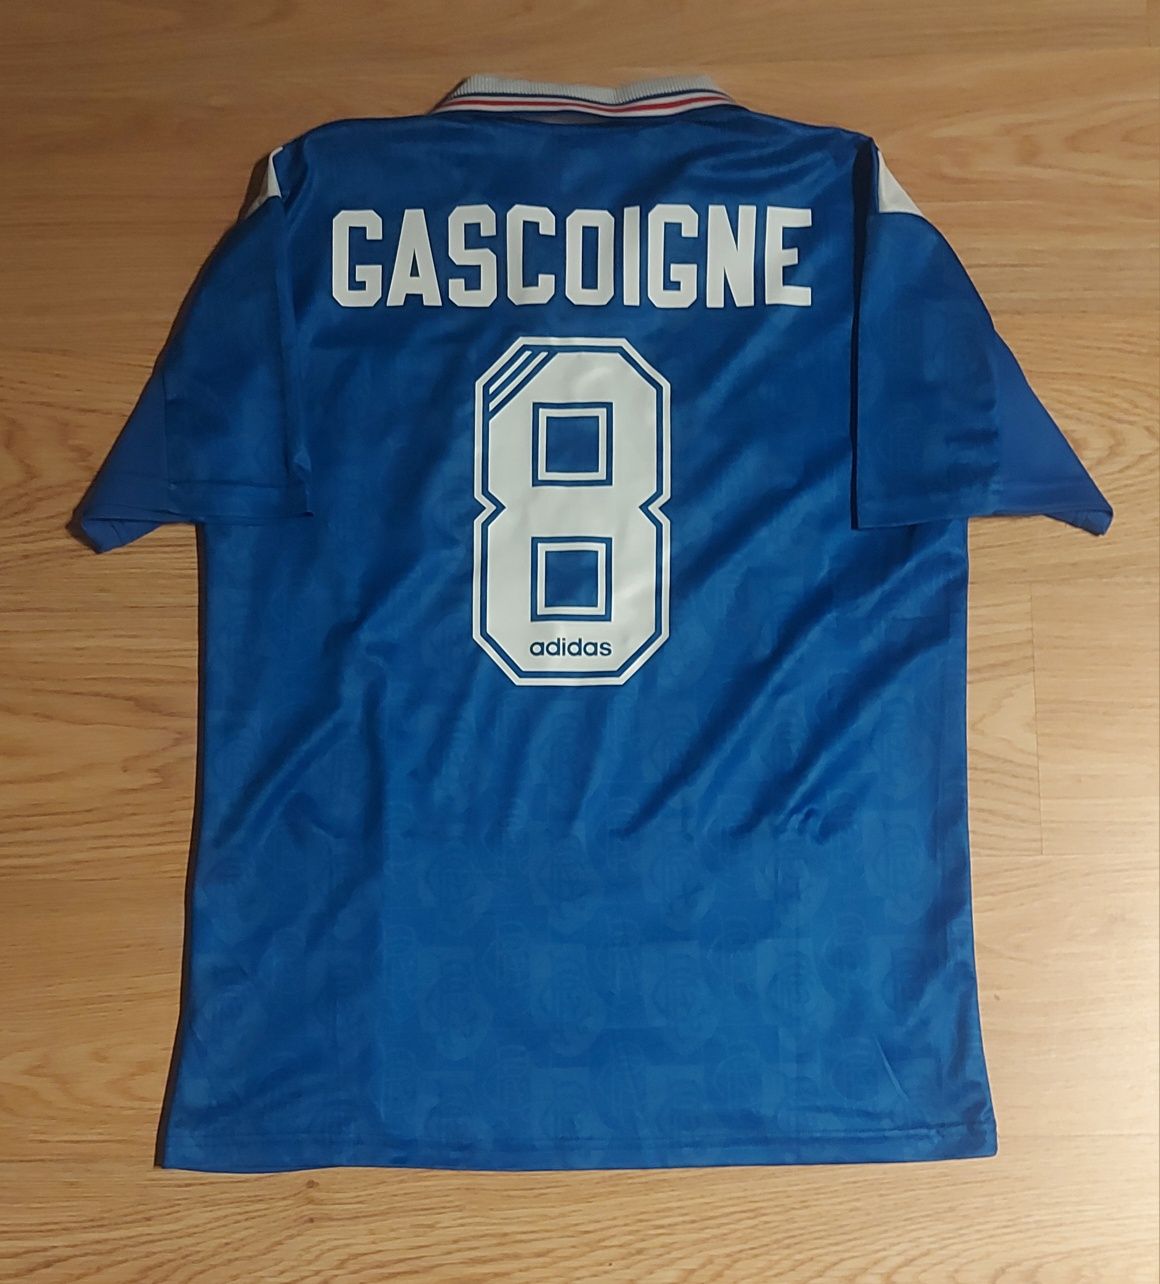 Camisola do jogador Gascoigne do Rangers FC 1995